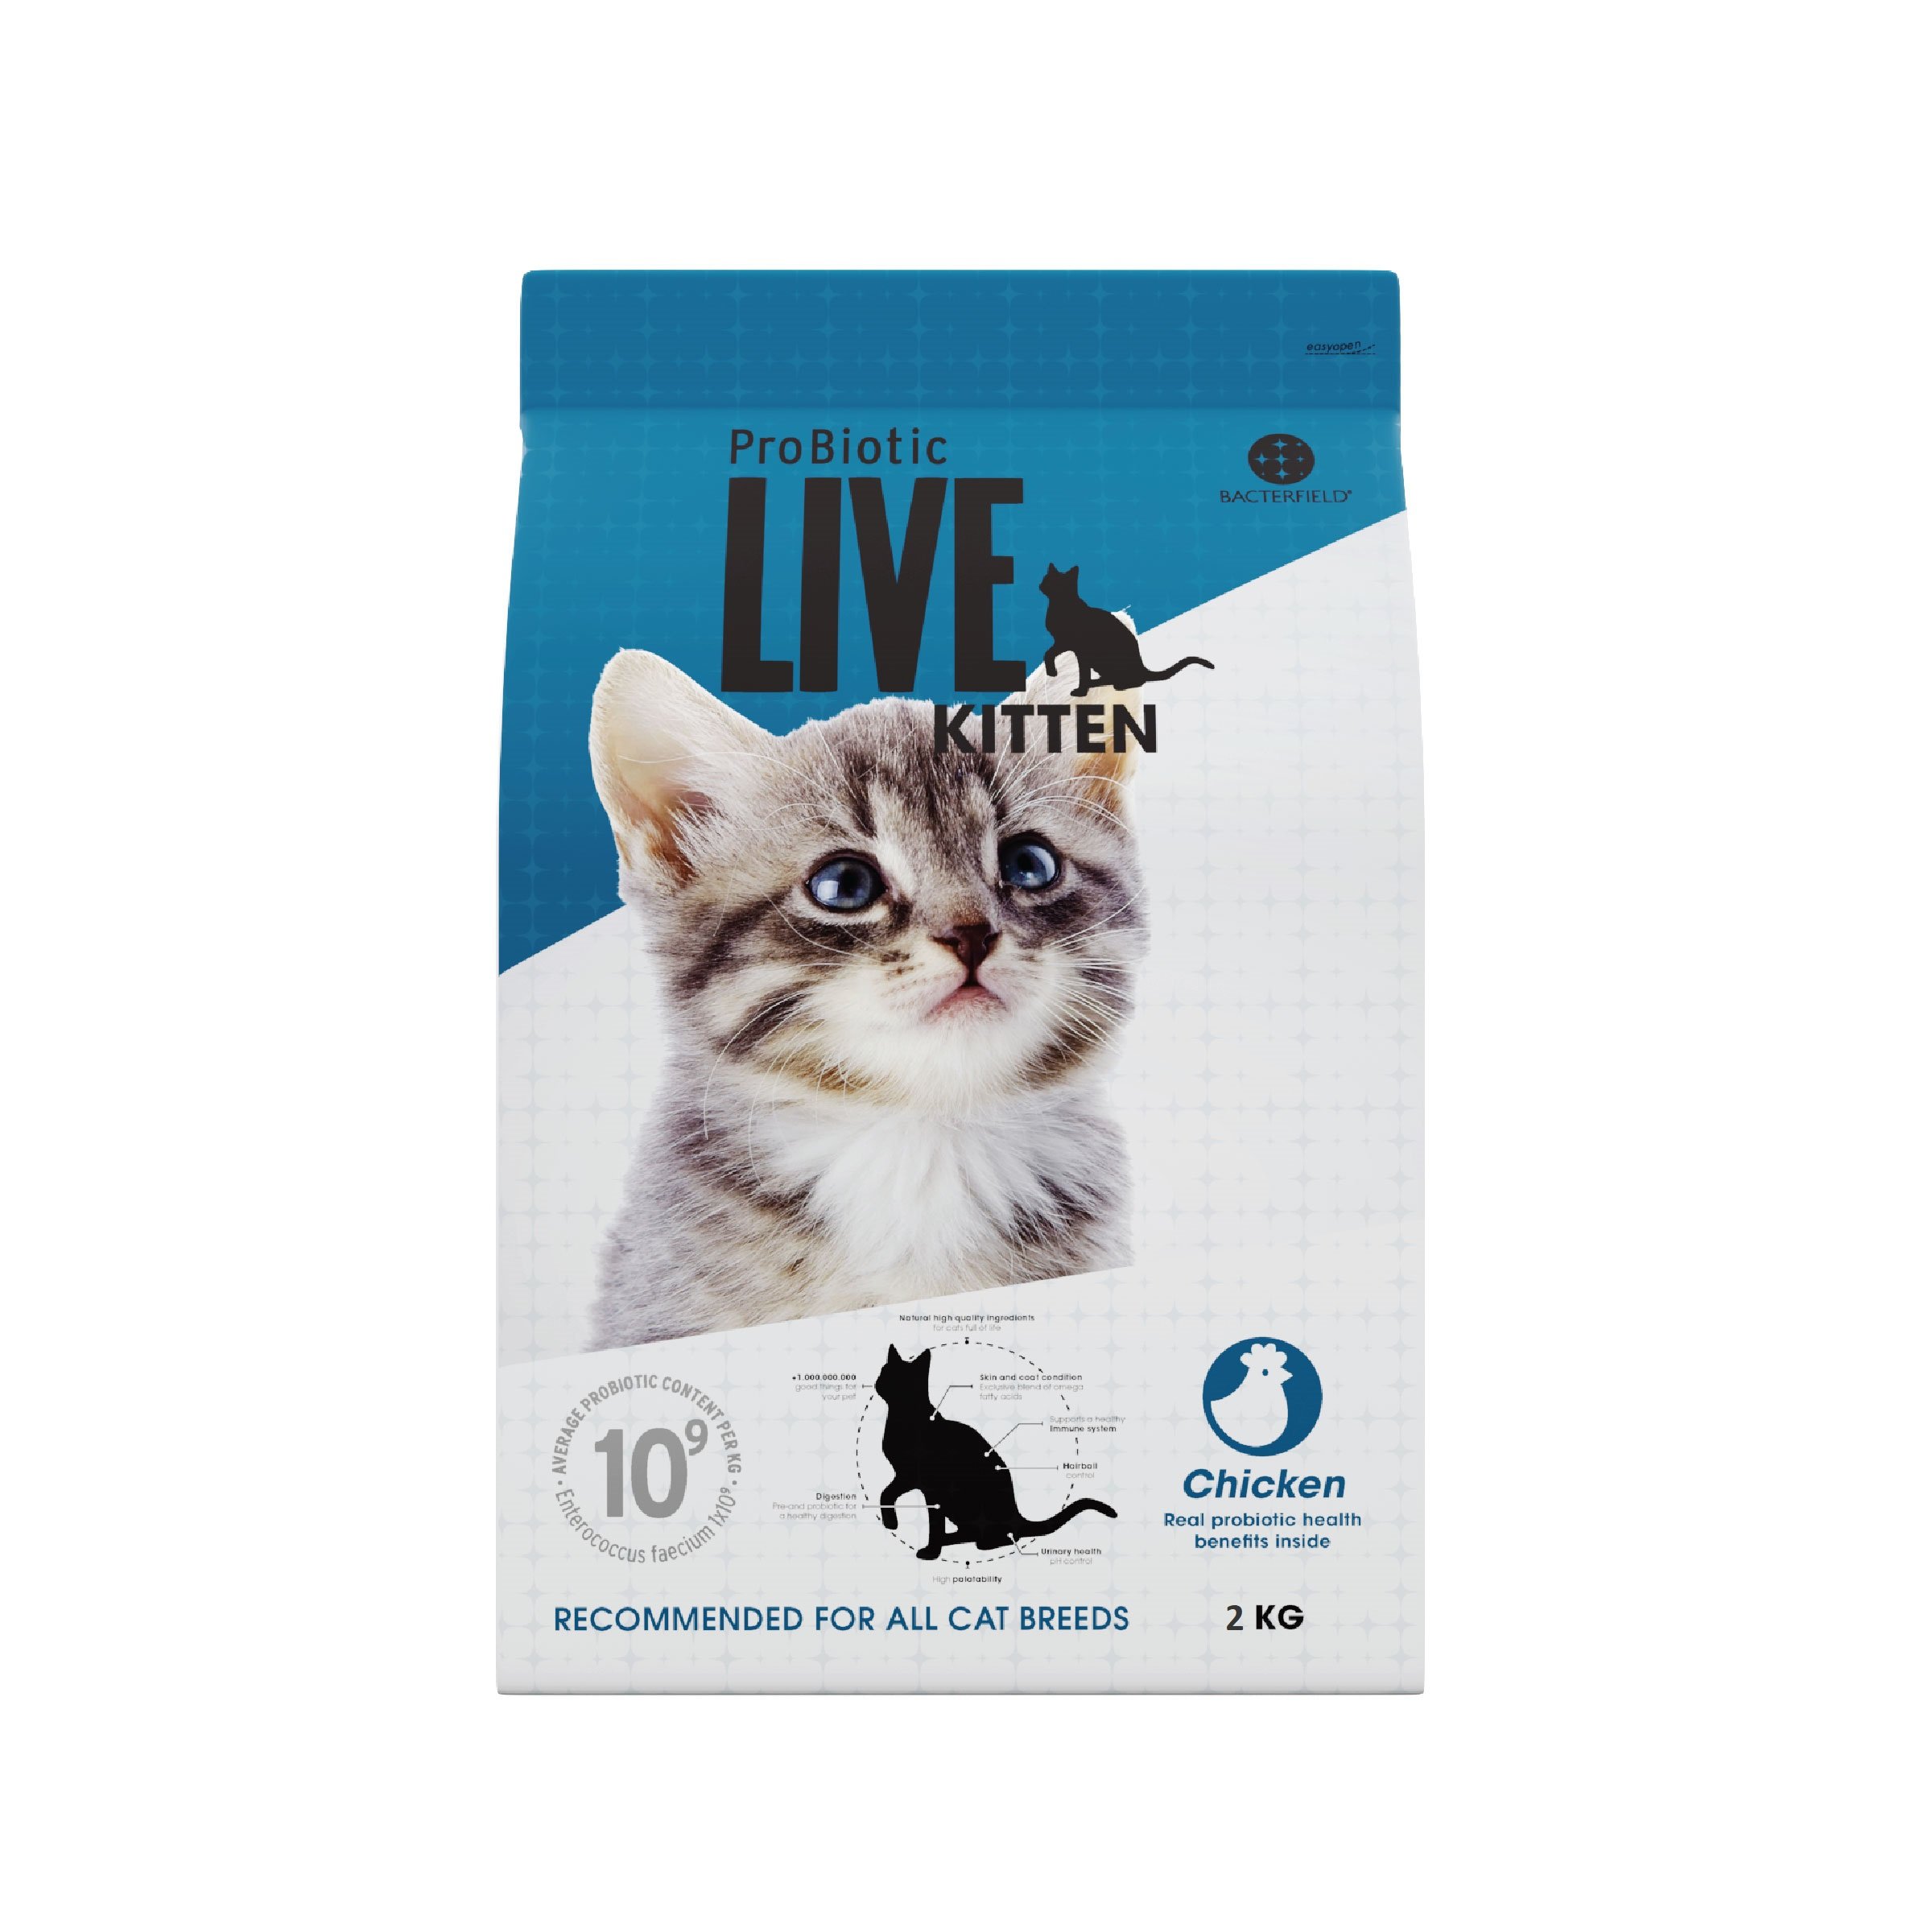 Probiotic Live Cat Food For Kitten